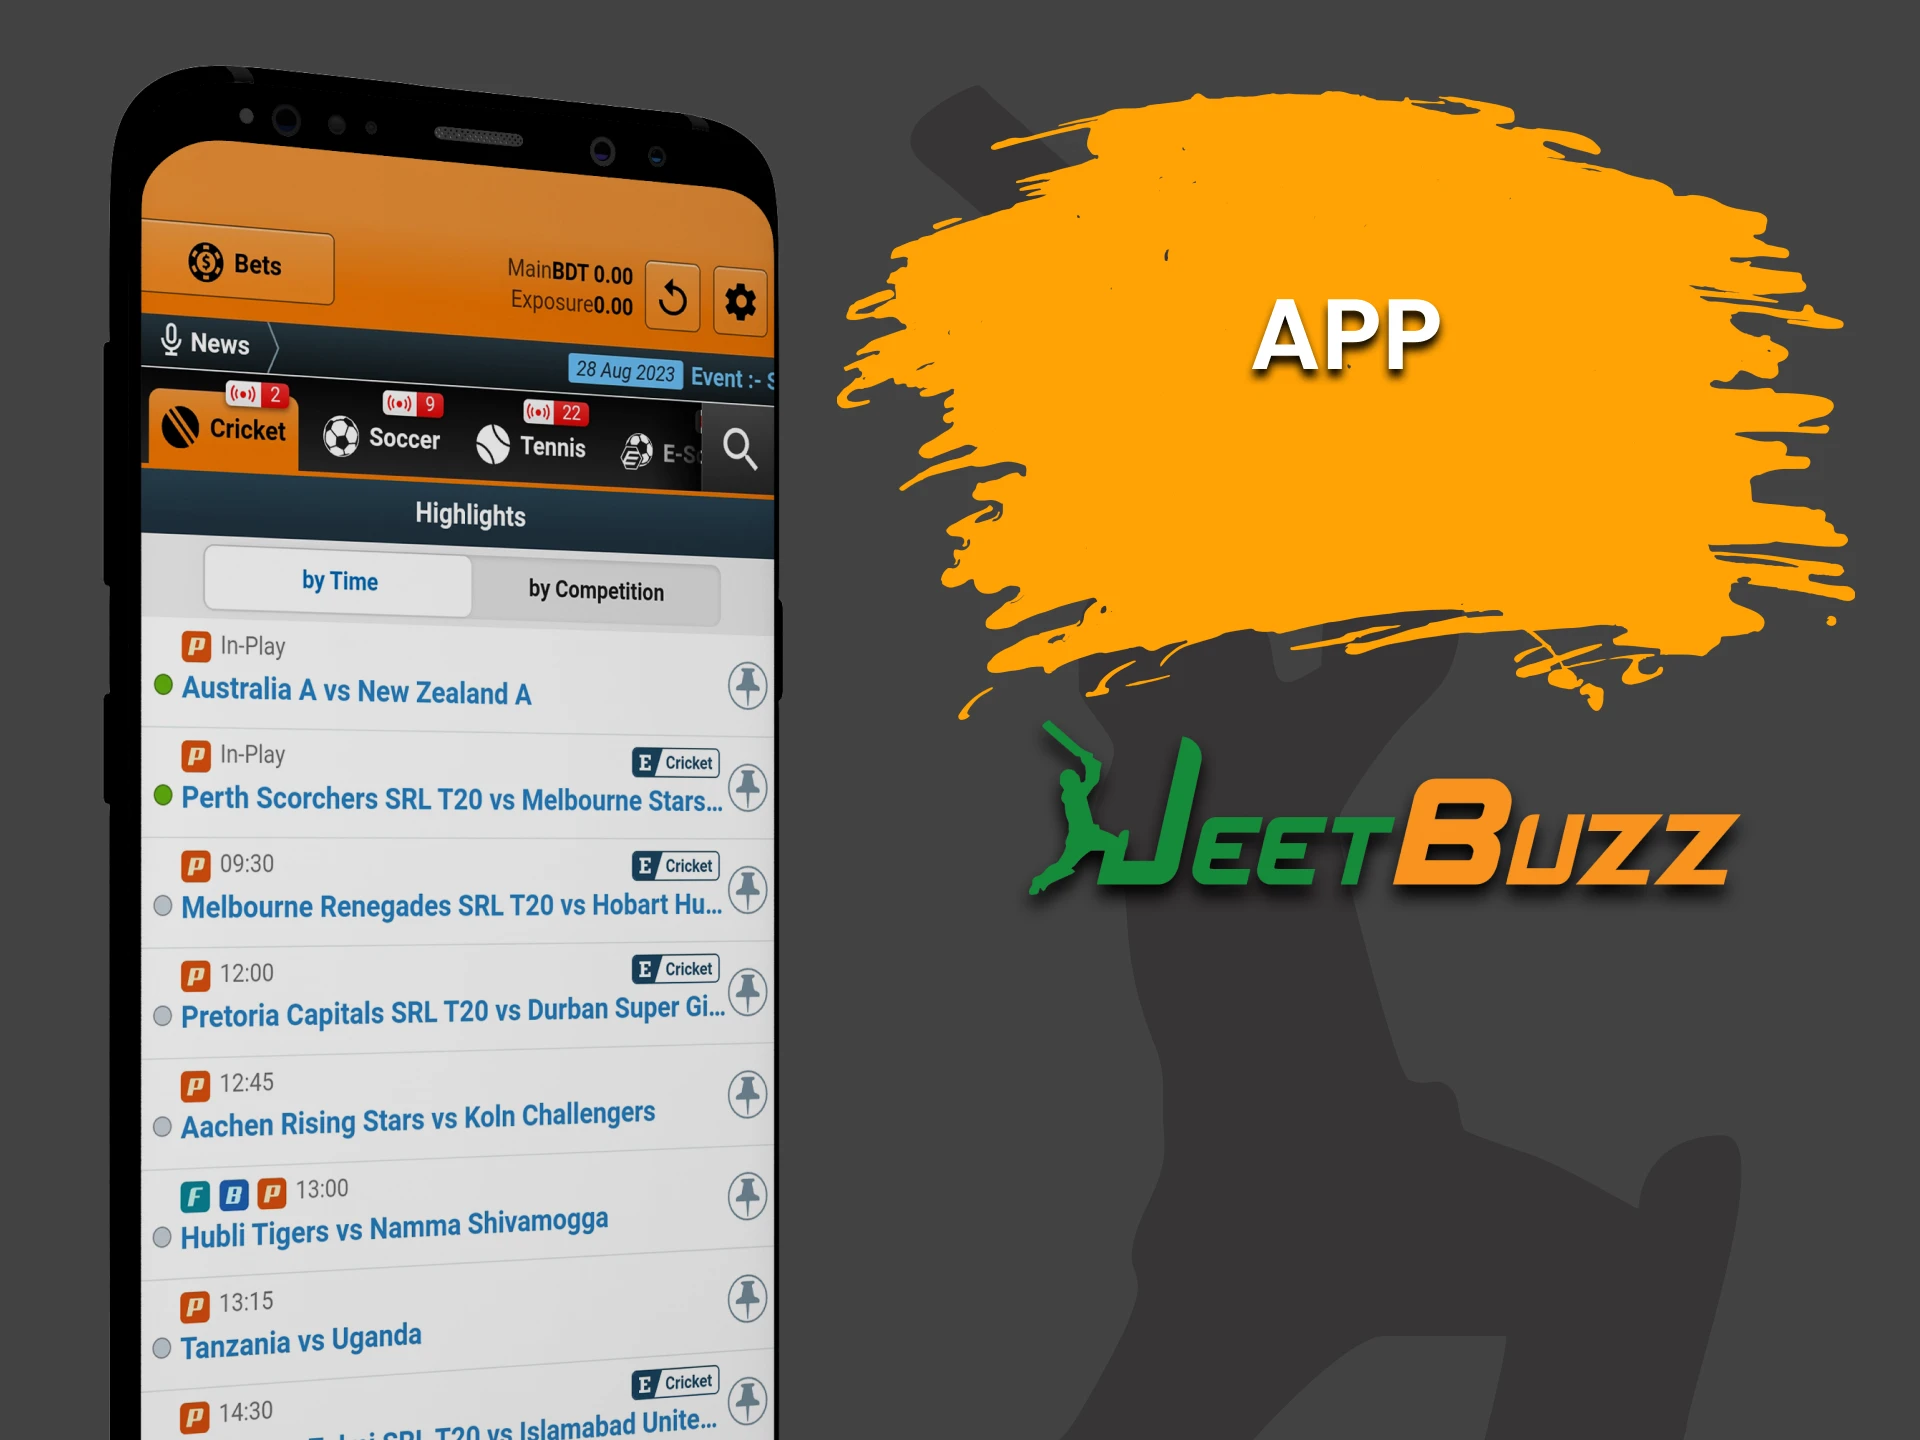 Choose the JeetBuzz cricket betting app.